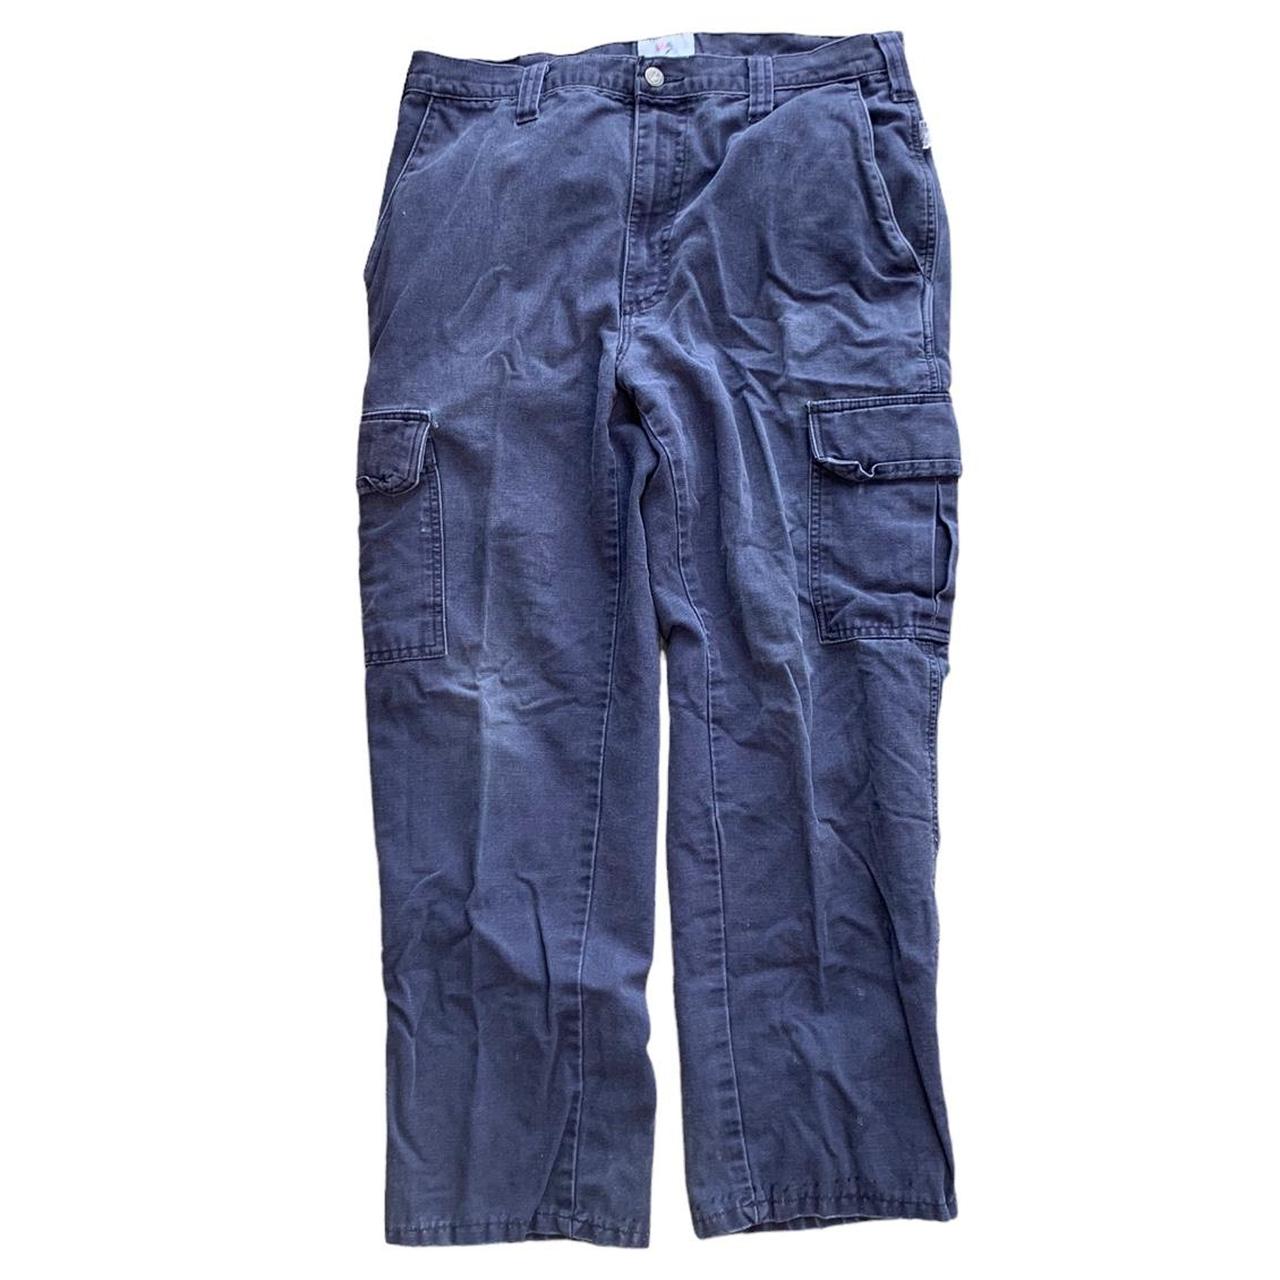 Navy cargo pants Good condition 34x28 2 pairs #vtg... - Depop